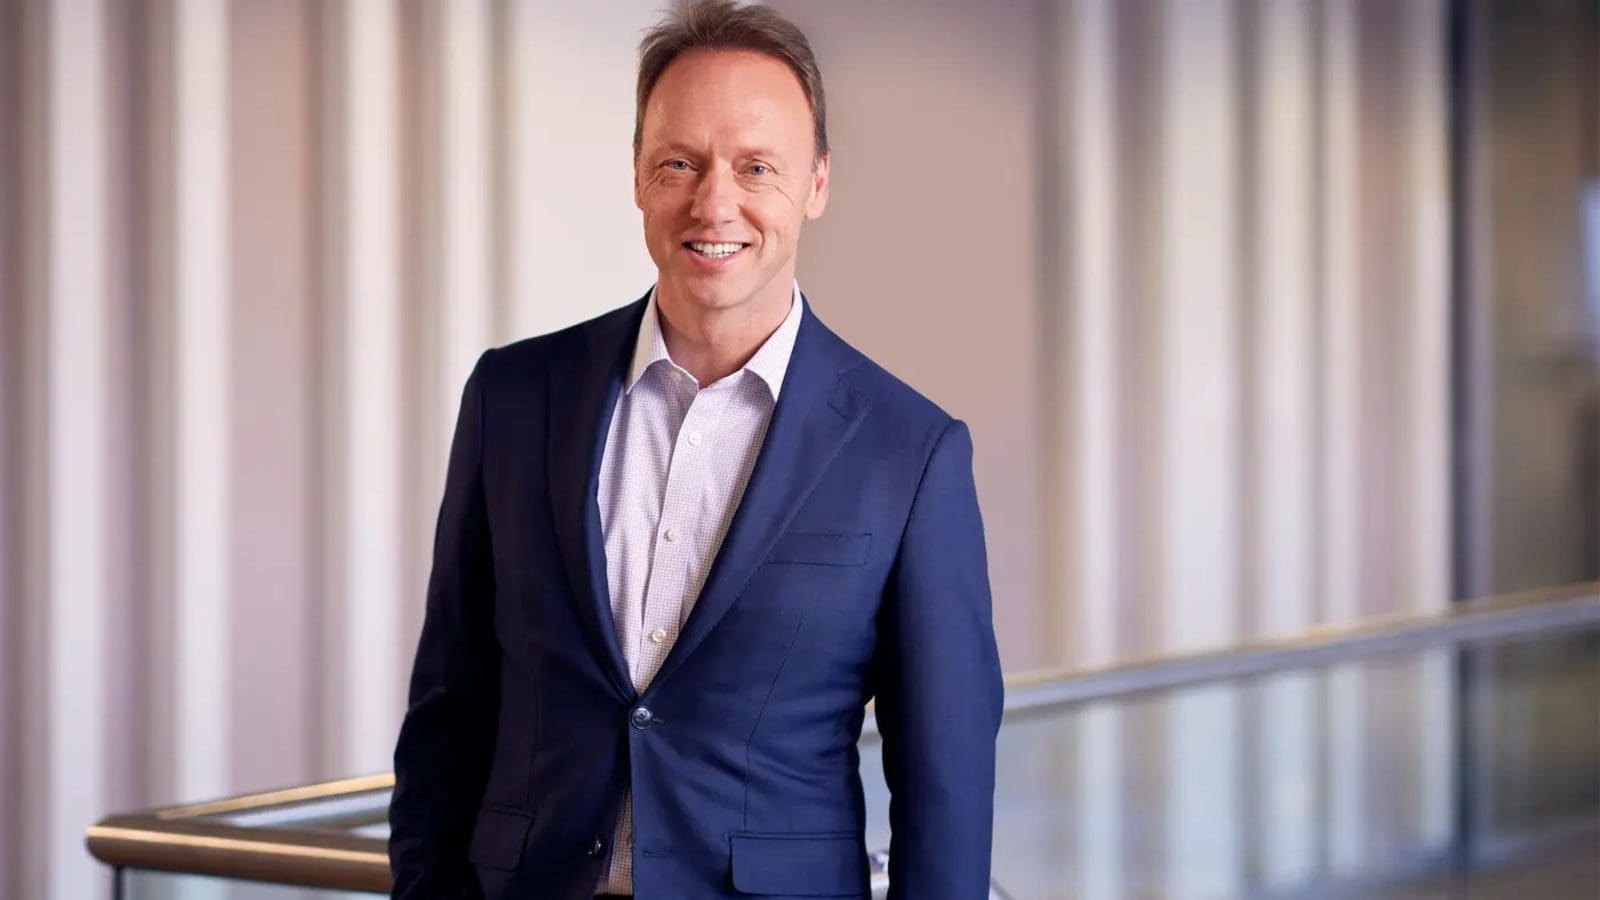 Unilever taps FrieslandCampina’s Chief Hein Schumacher as new CEO, awards him US$1.96m salary